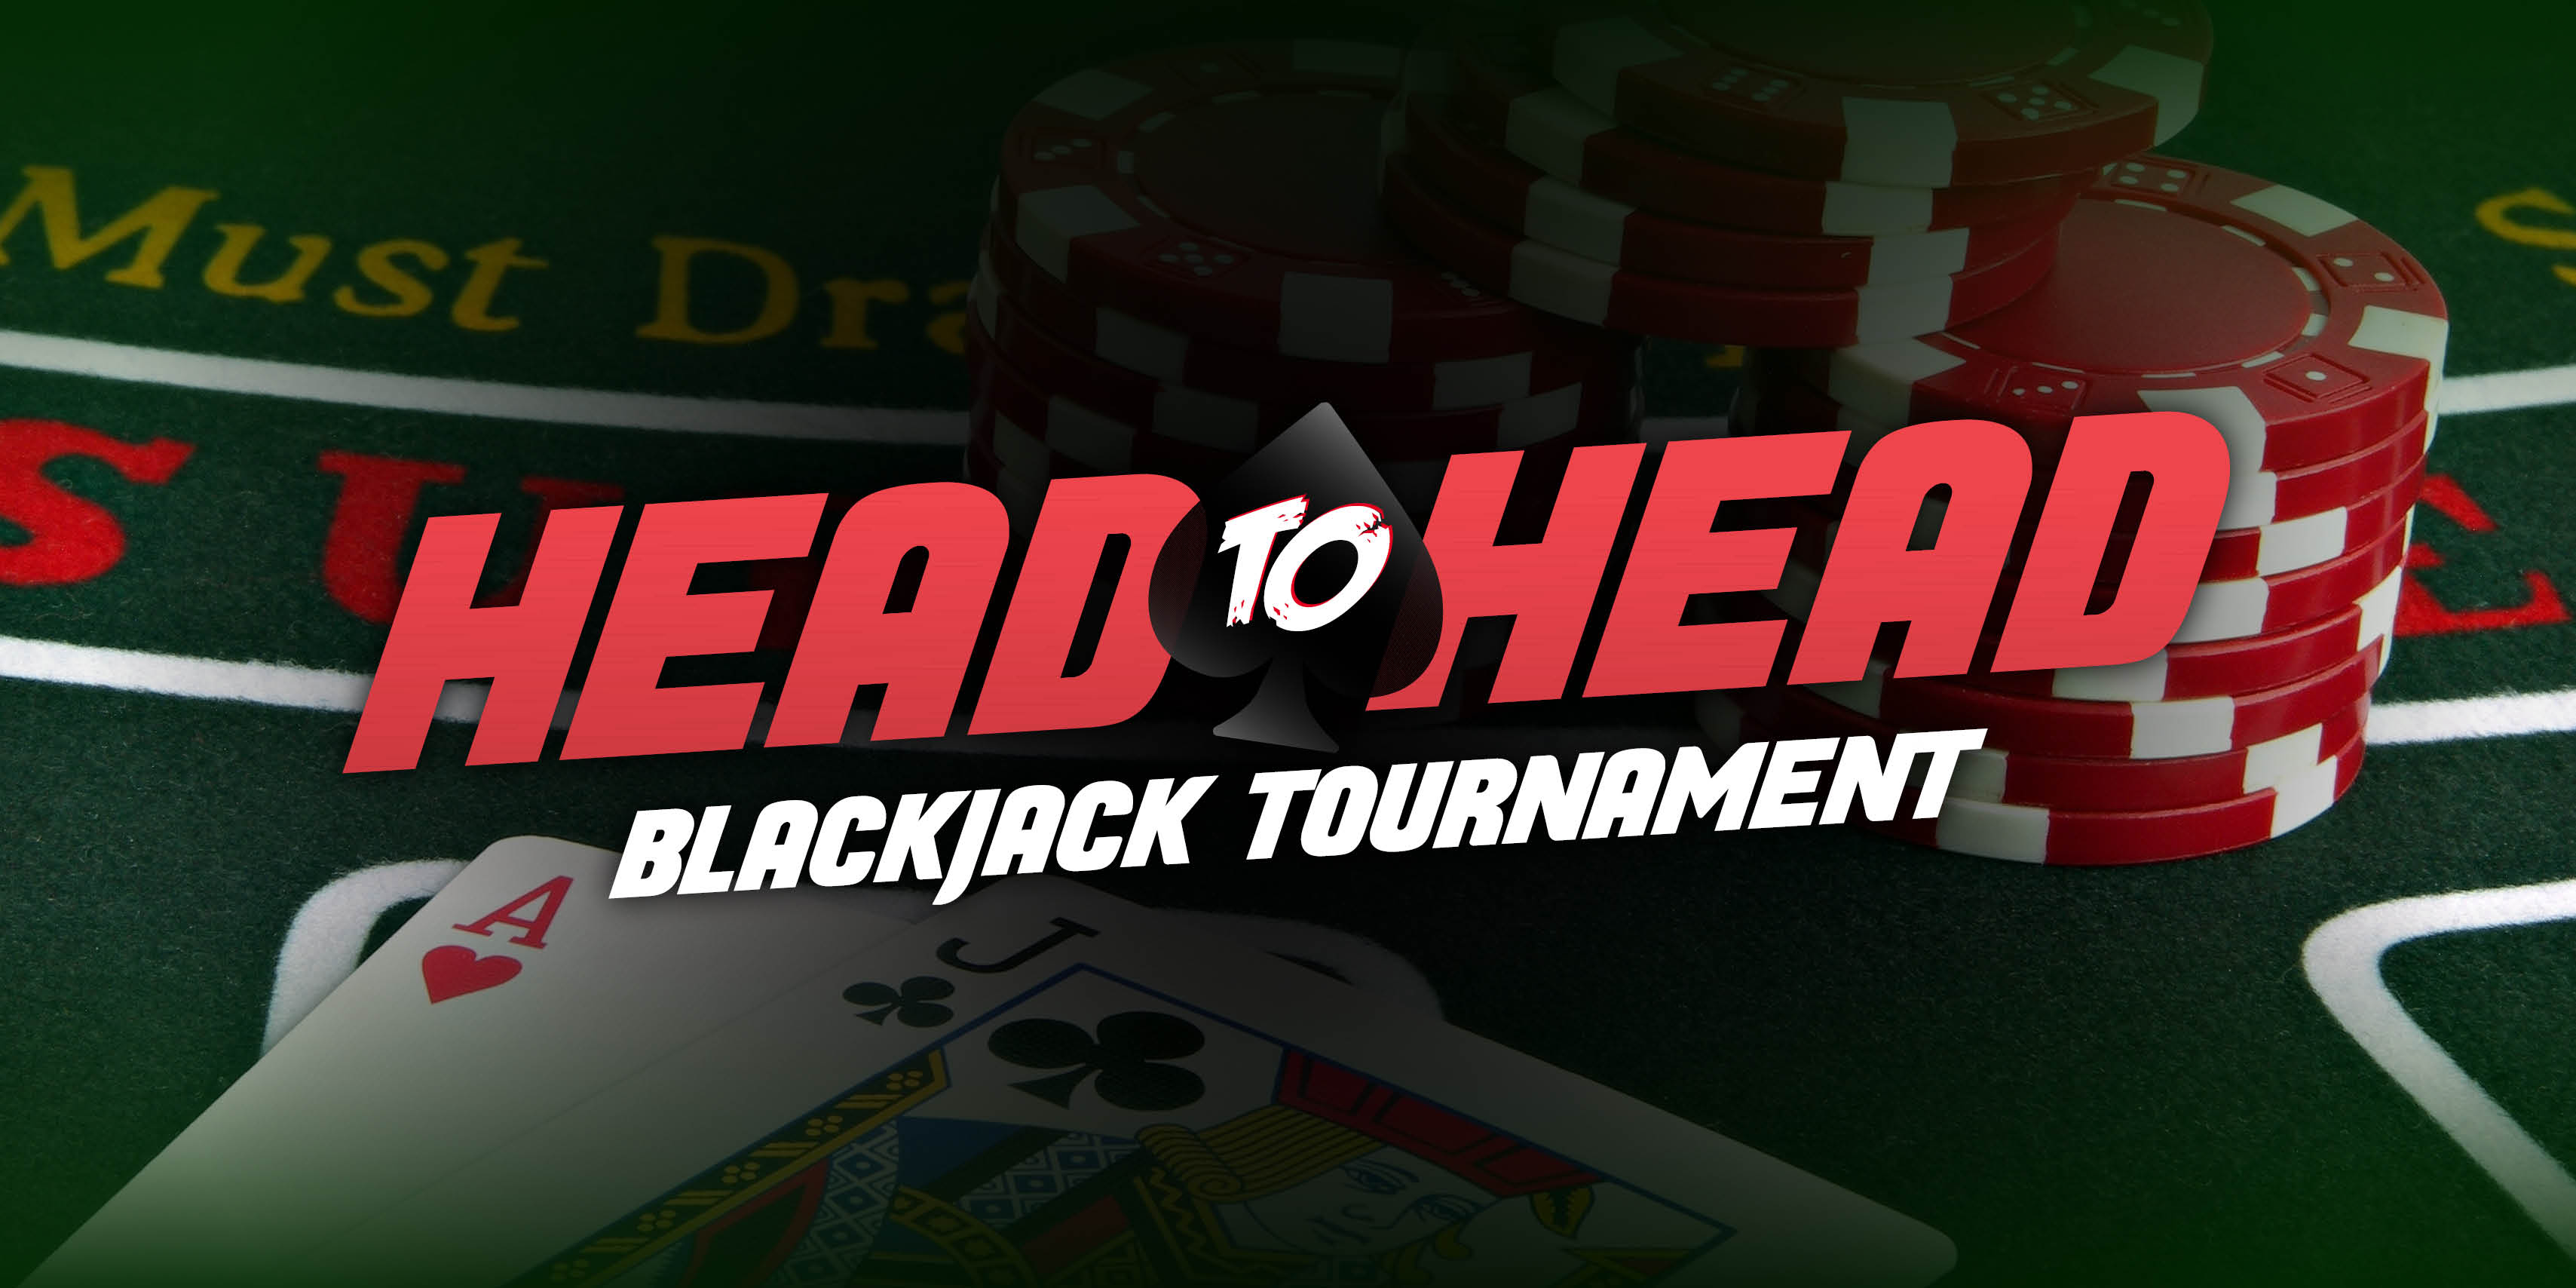 blackjack head to head tournament strategy